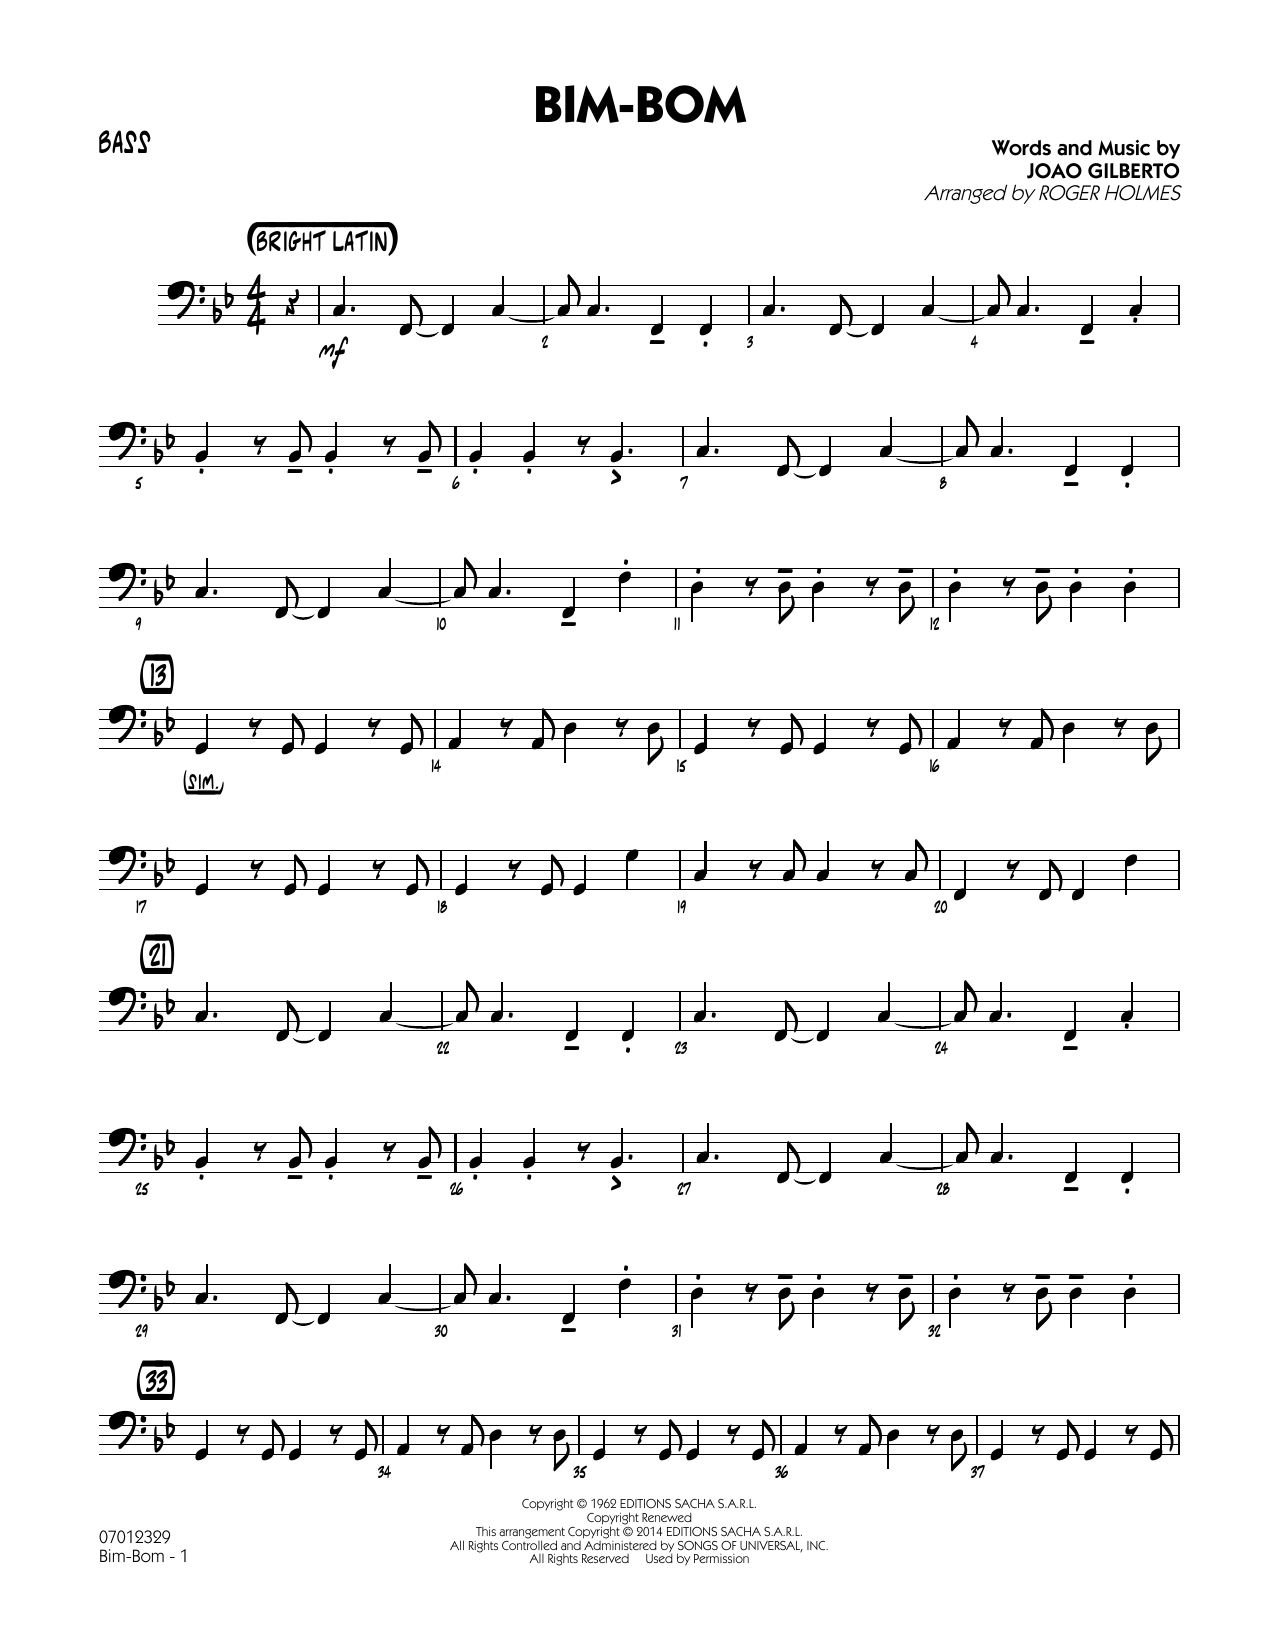 Roger Holmes Bim-Bom - Bass sheet music notes and chords. Download Printable PDF.